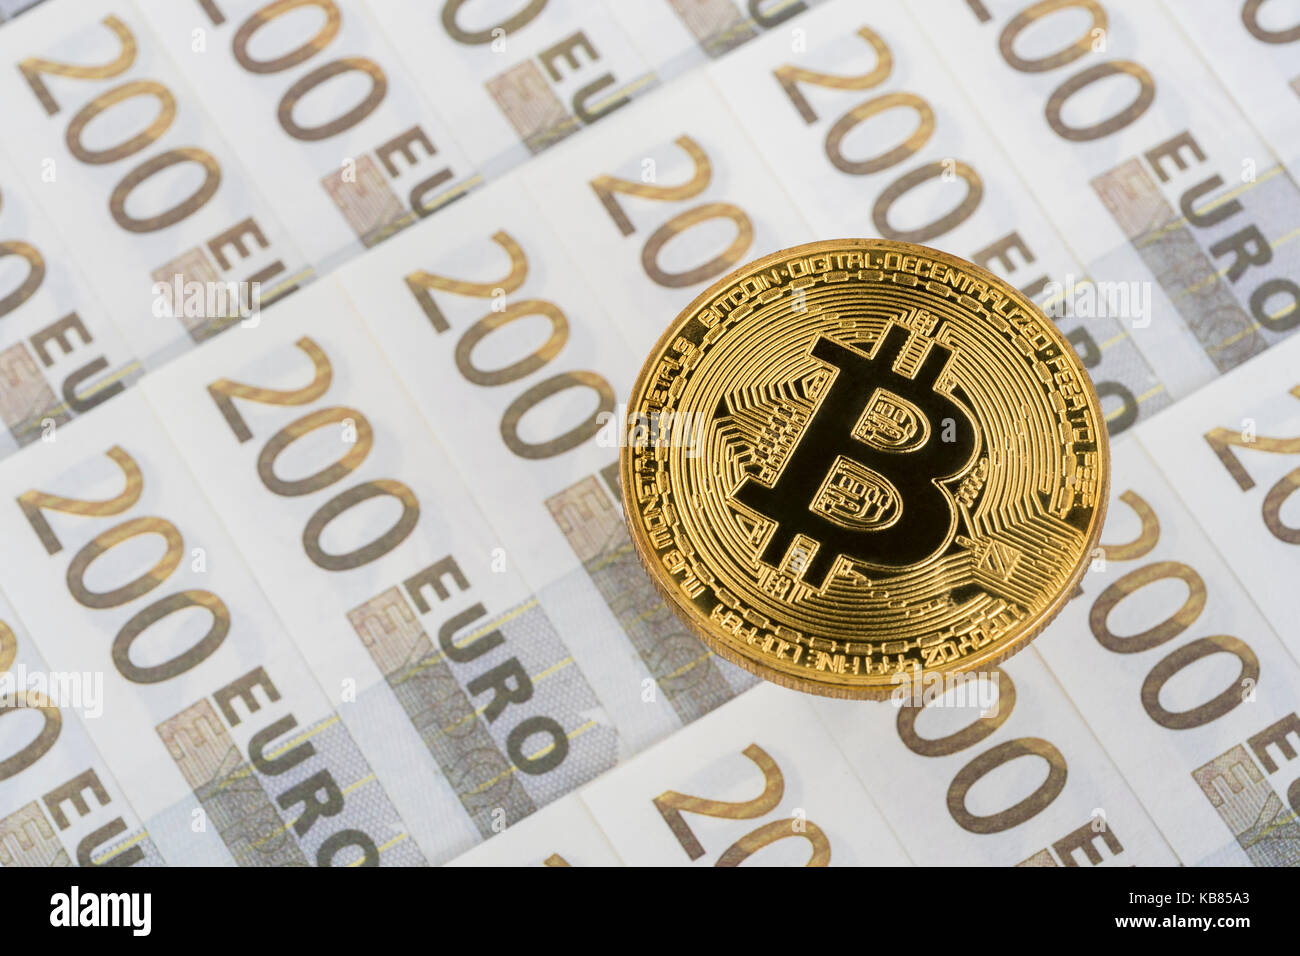 bitcoin price july 2015